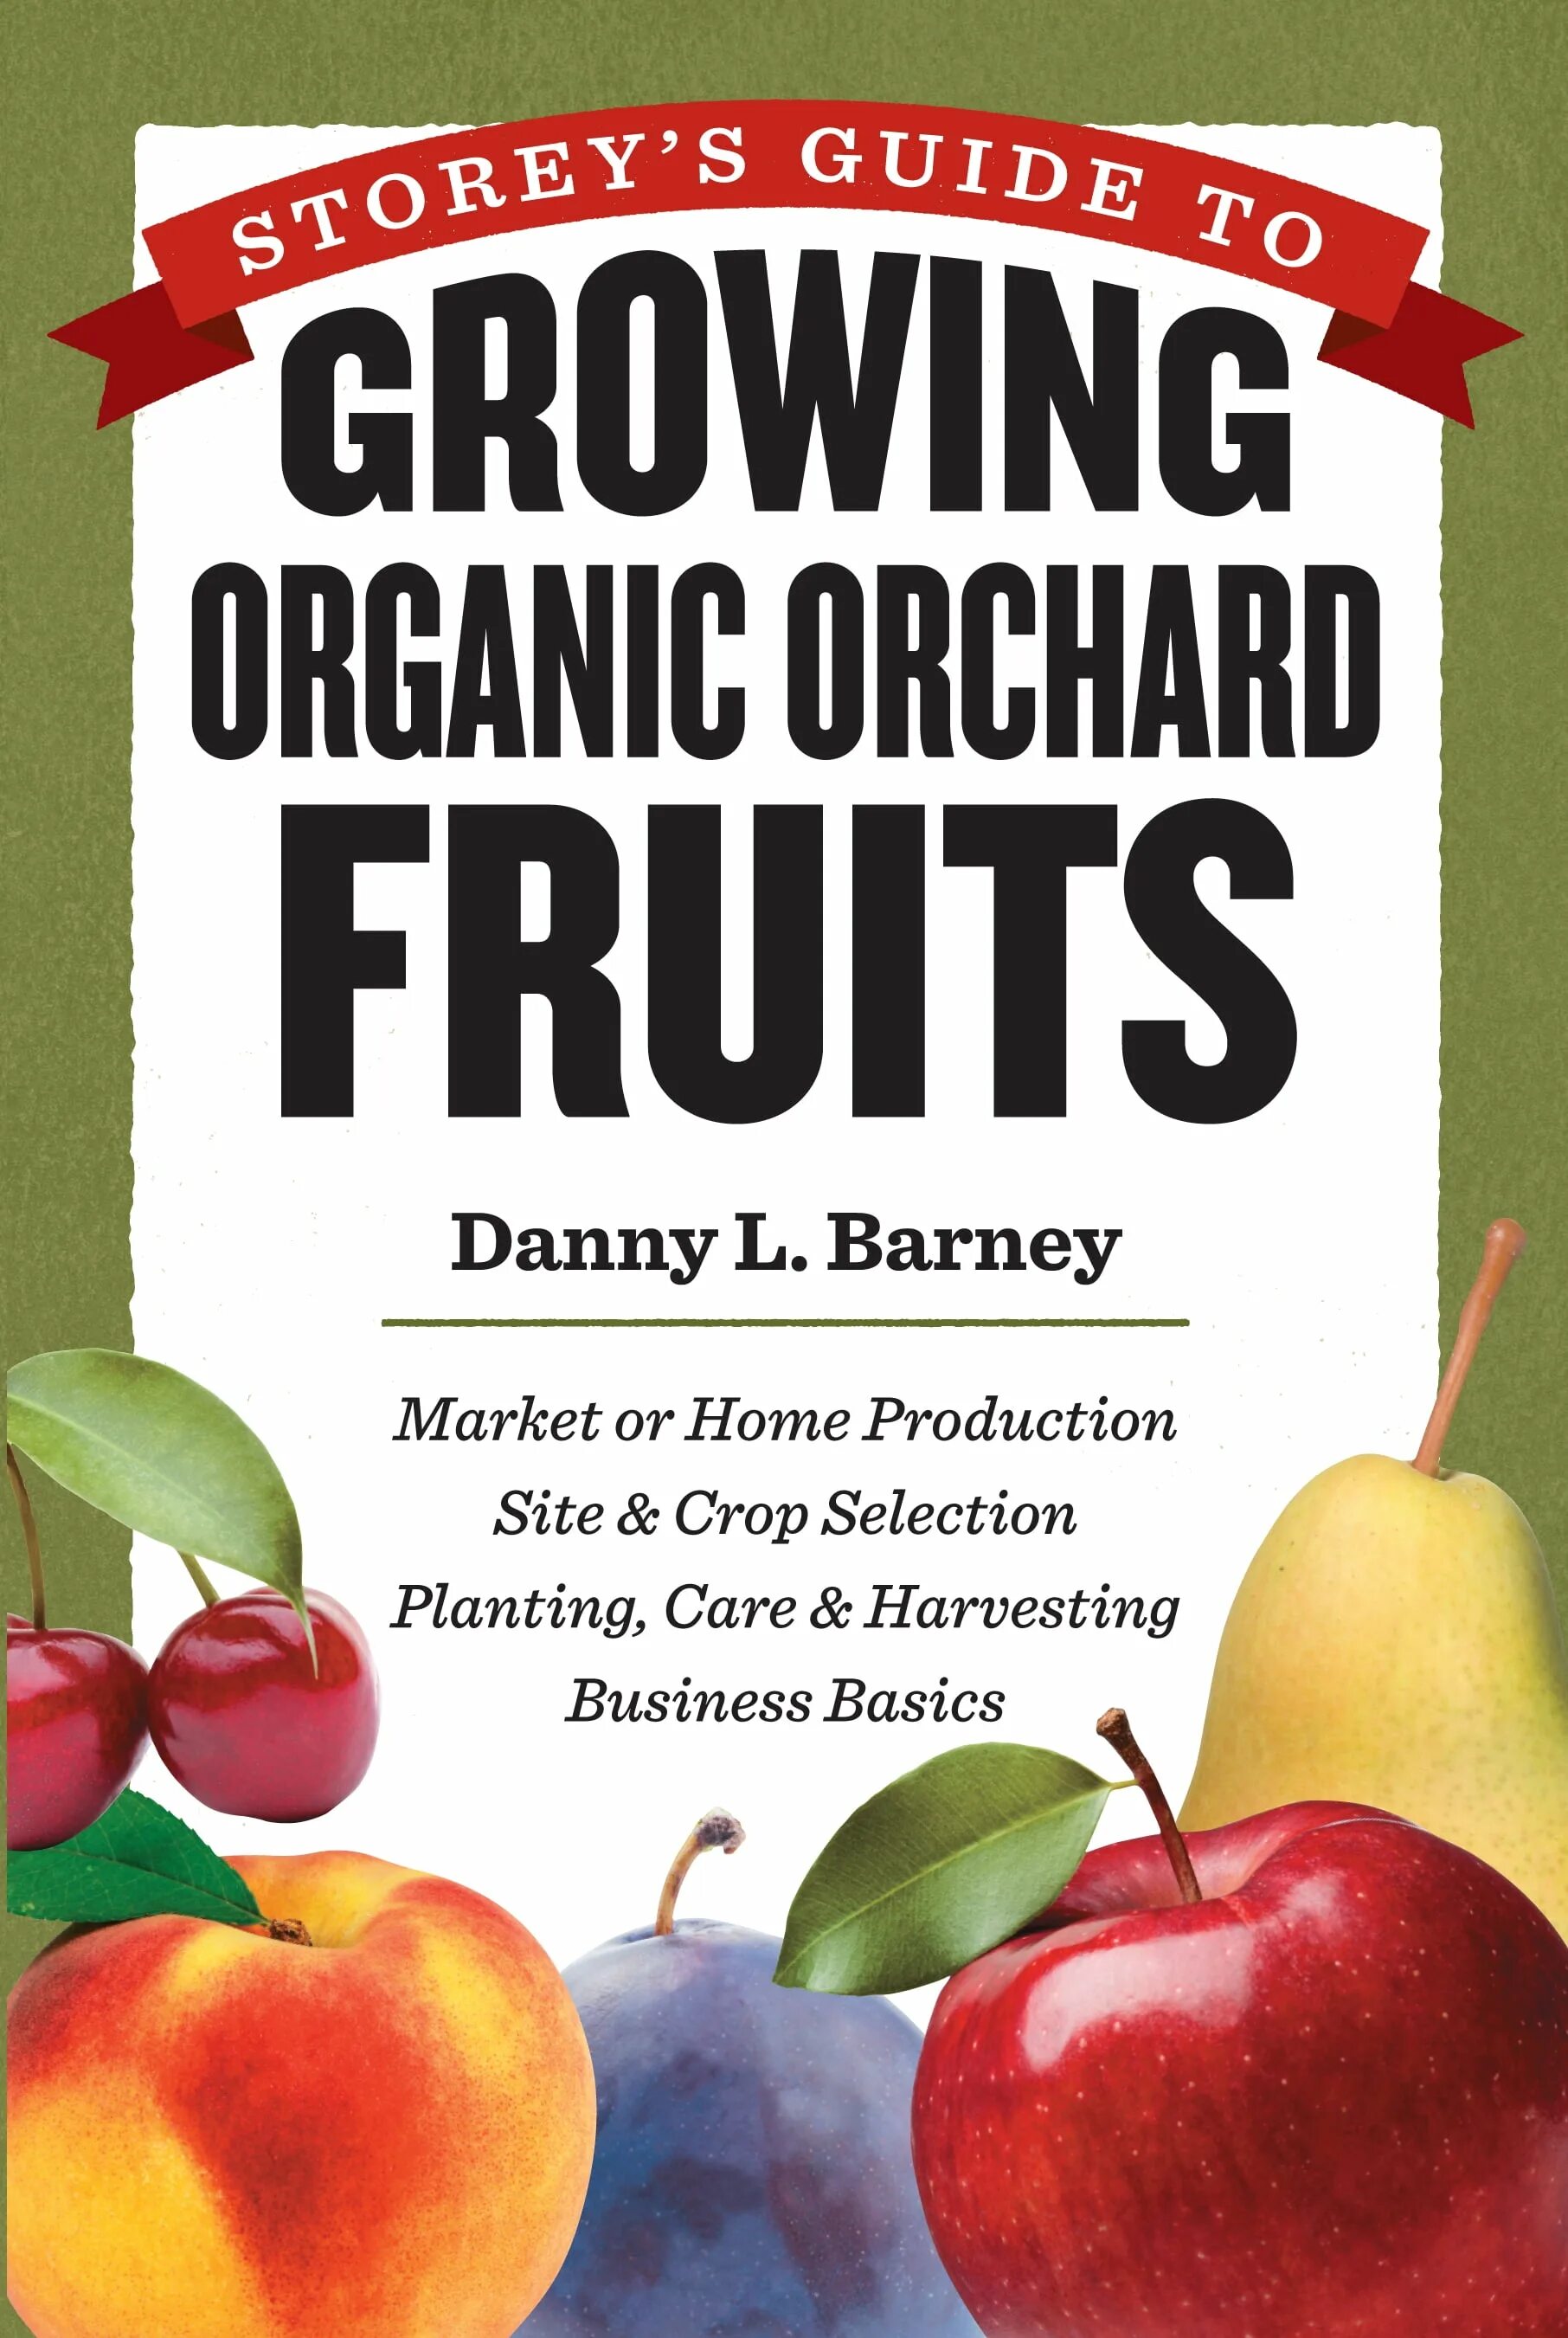 Danny Barney. Growing stories. Grand Regional Orchards фрукты поставщик. Market products. Grow stories